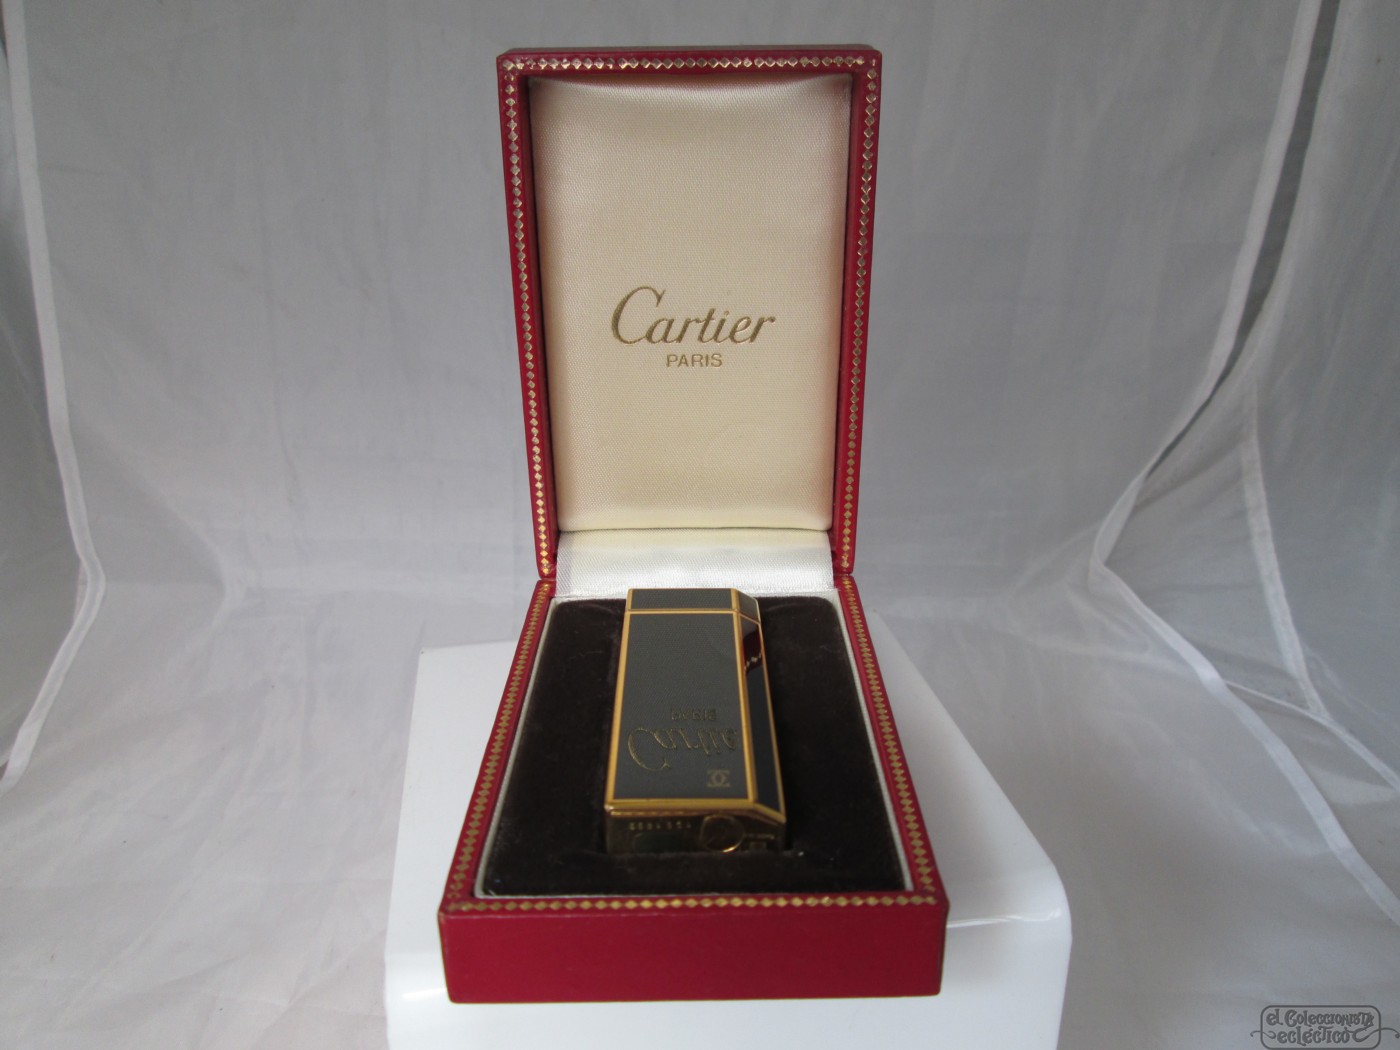 Cartier Paris, 20 microns gold plated 